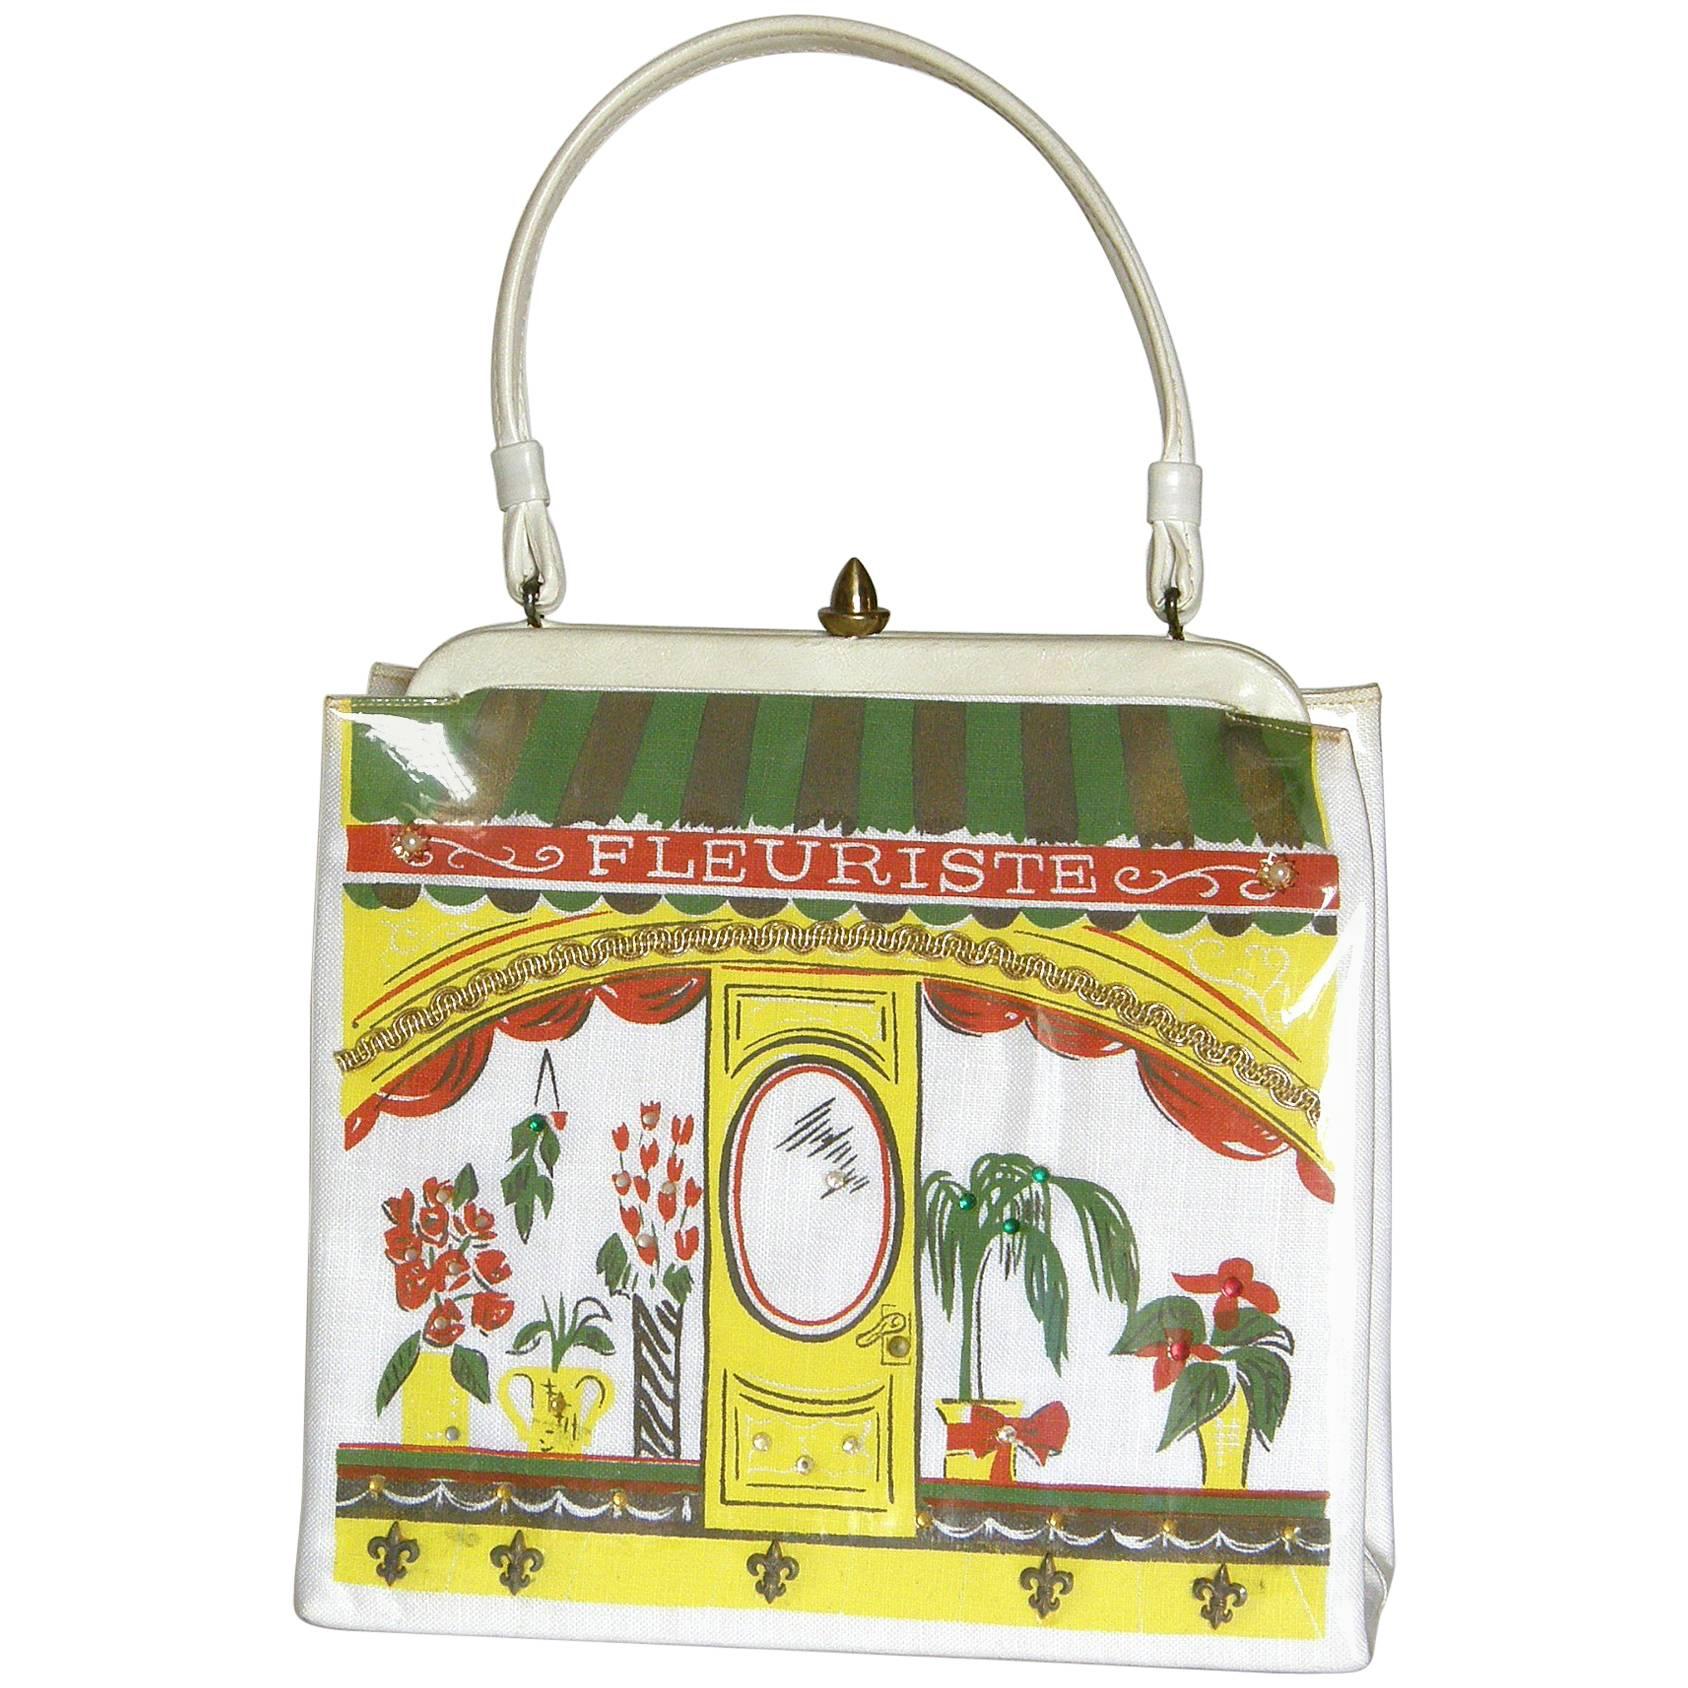 "Fleuriste" Handbag By Soure with Florist Shop Storefront Design